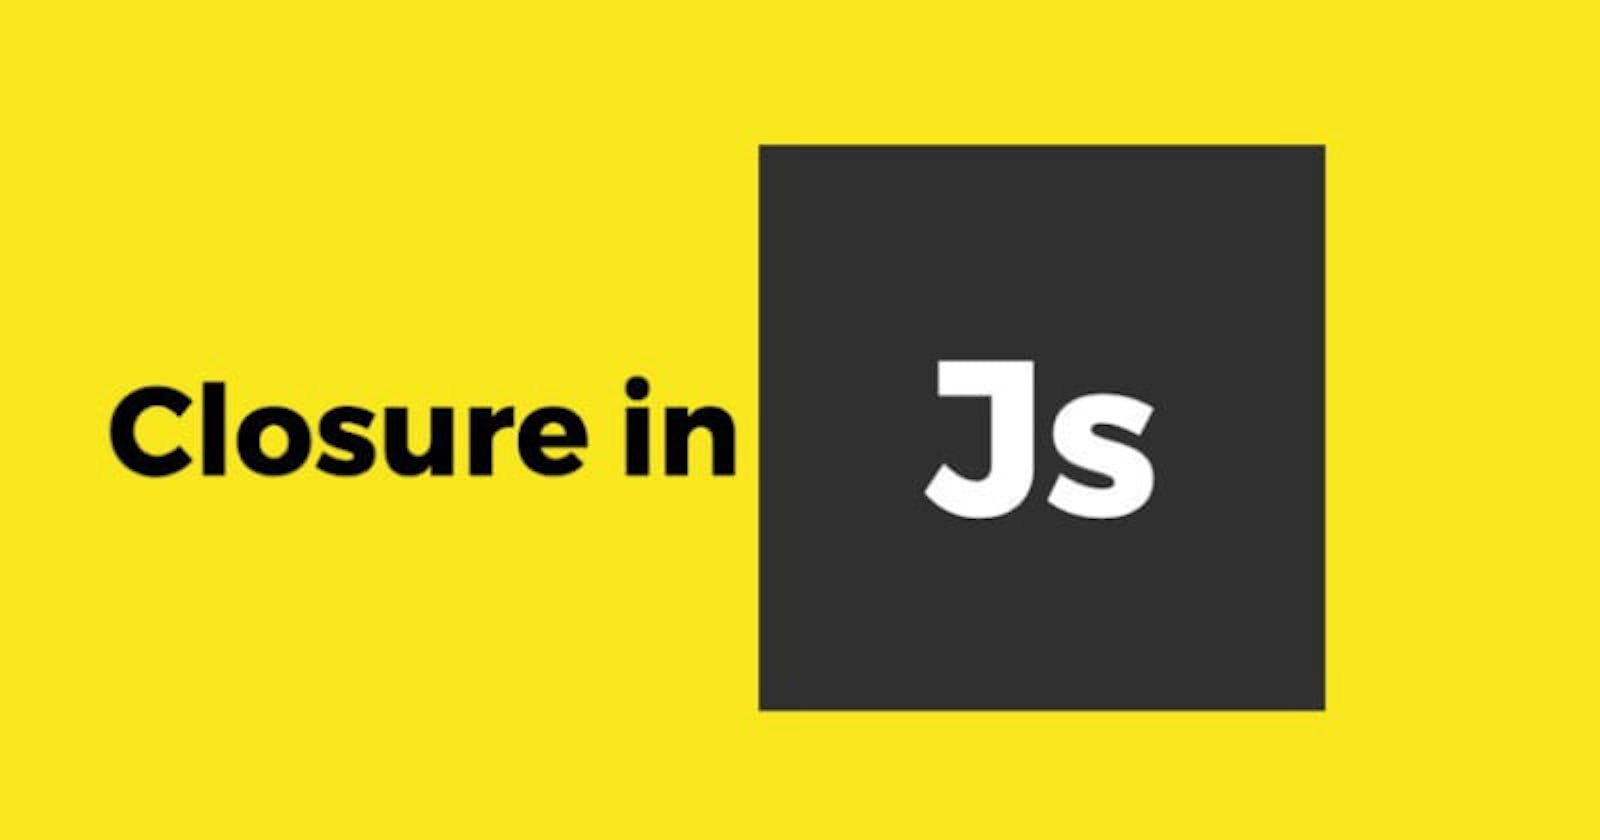 What is Closure in Javascript?